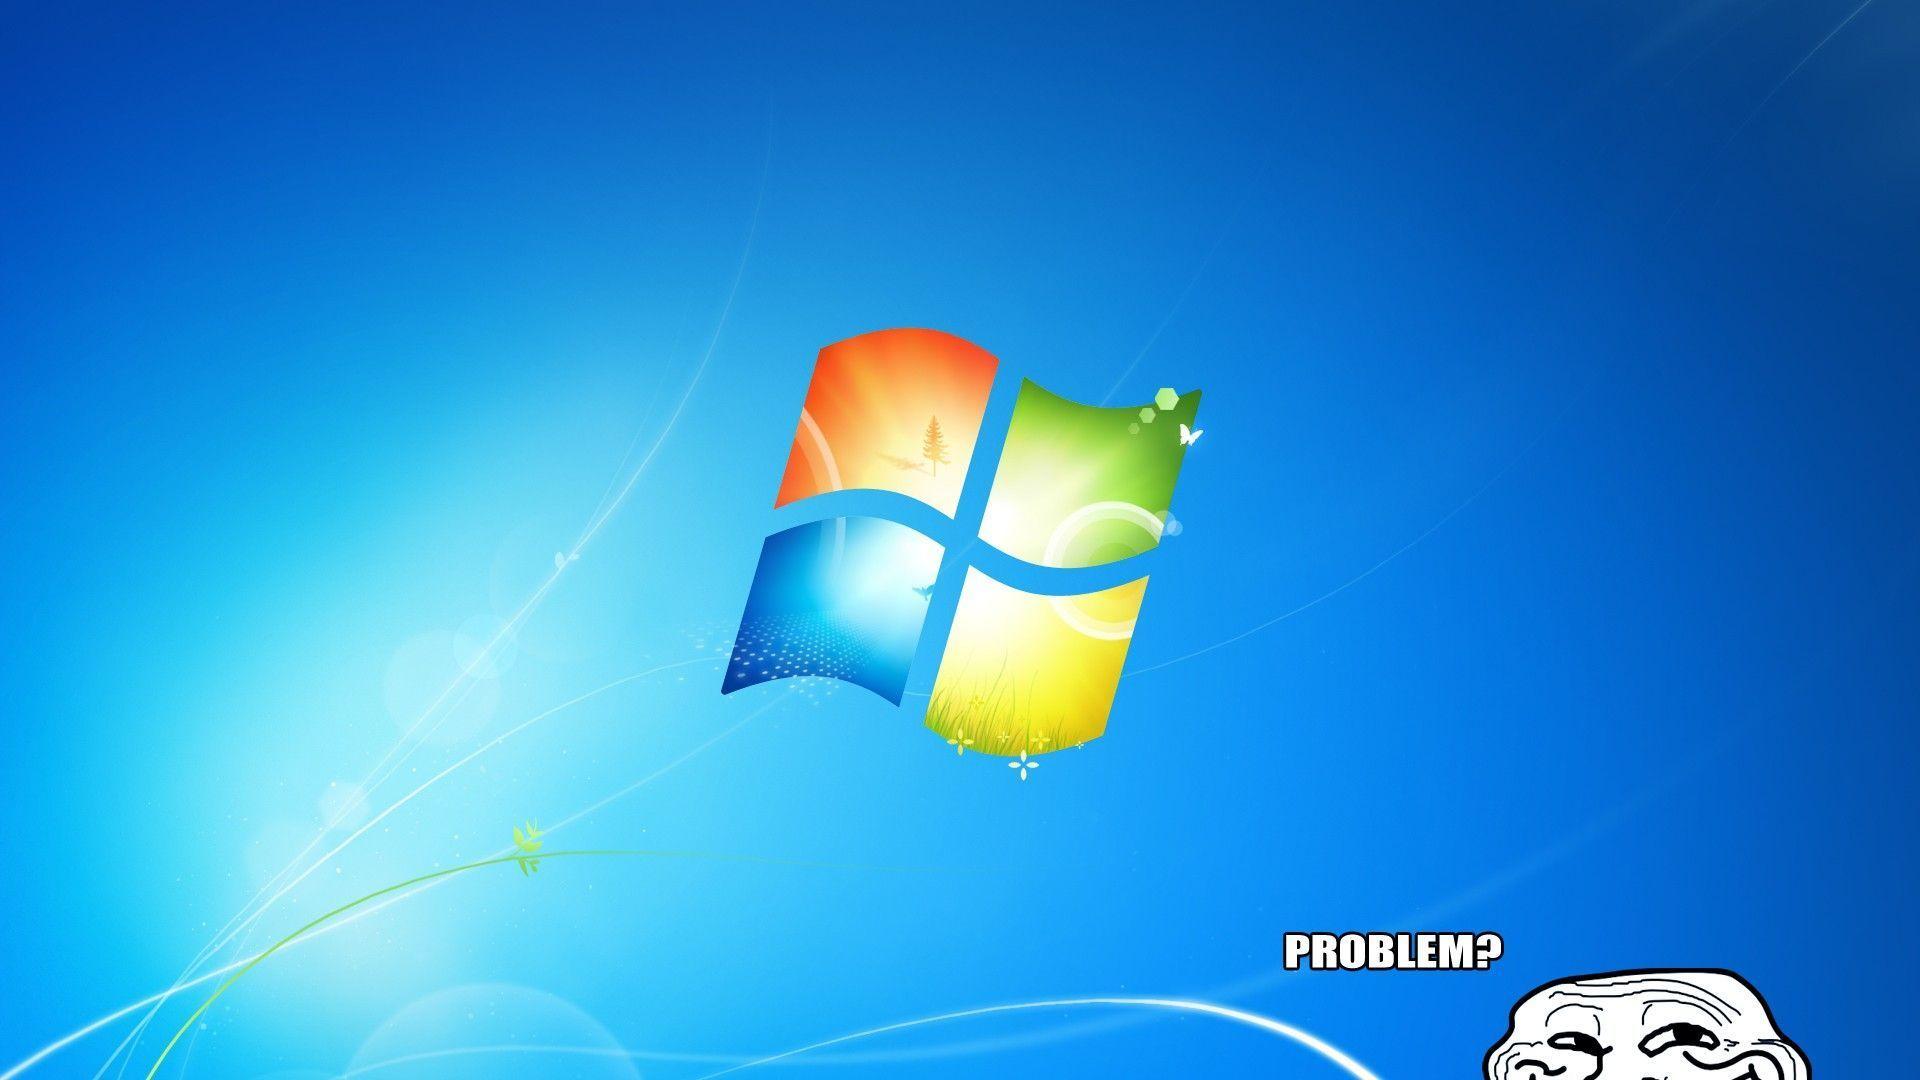 Download Windows 7 Wallpaper 1920x1080